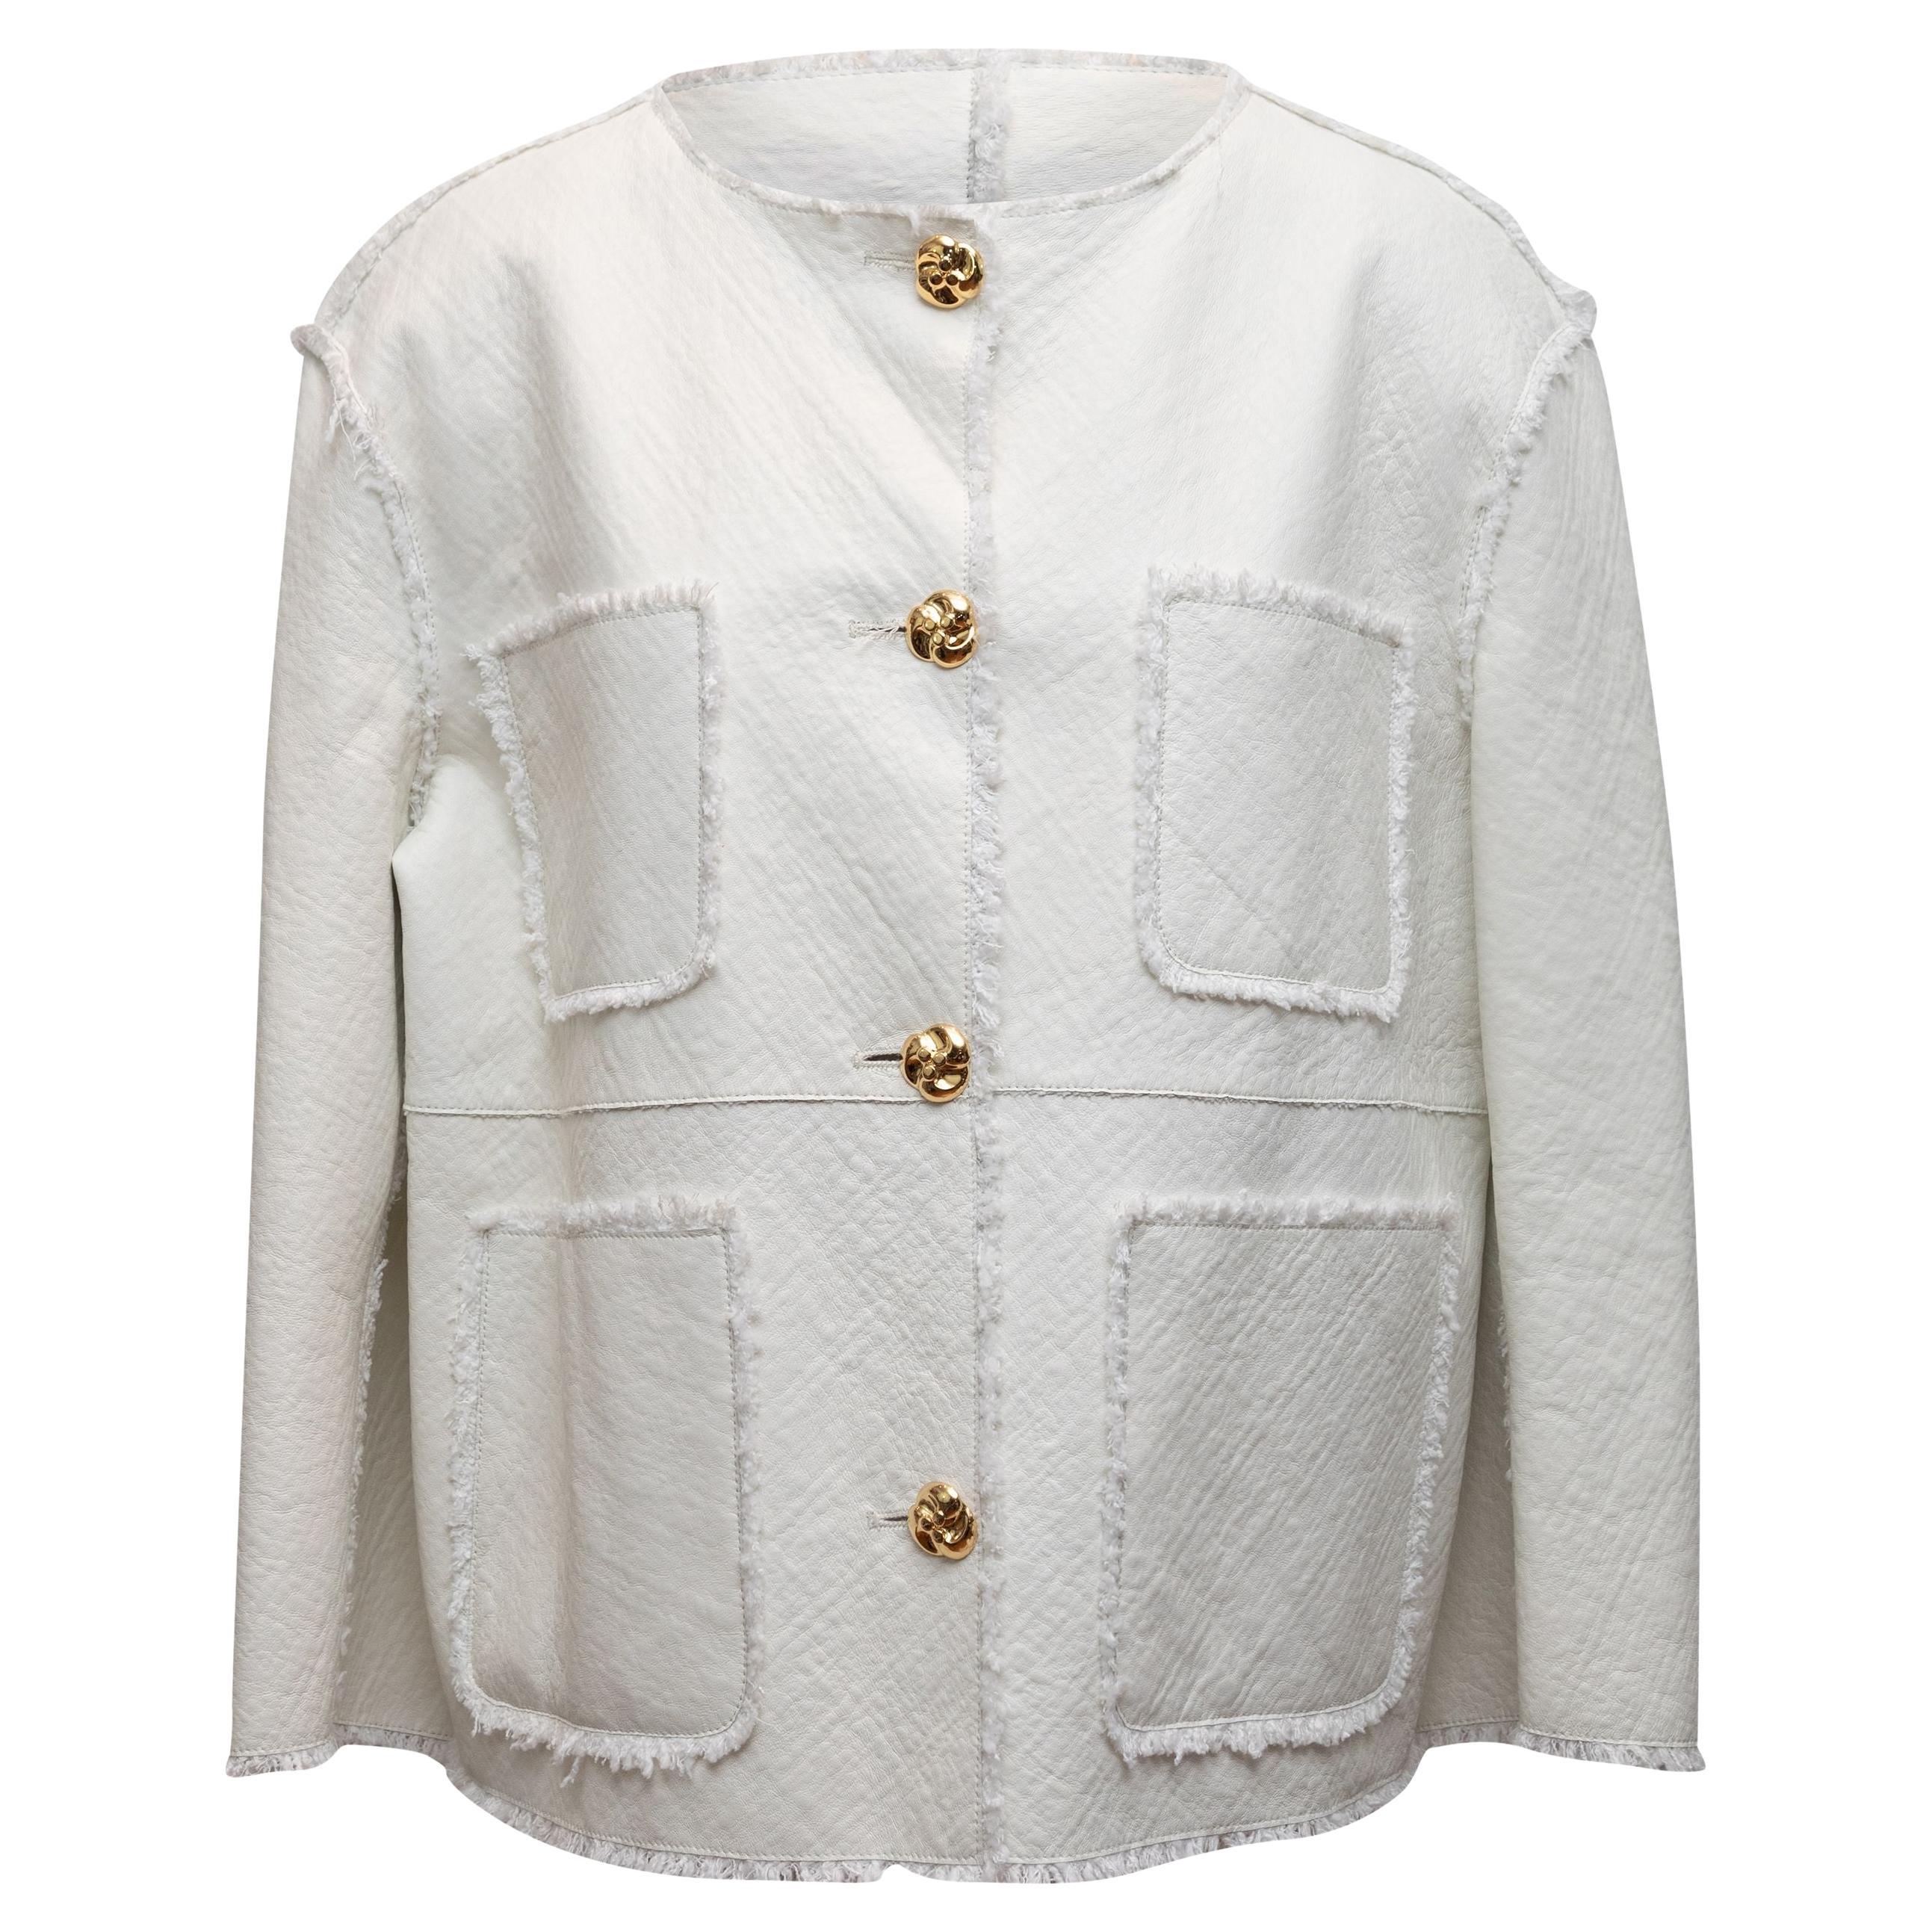 St. John White Leather Fringe-Trimmed Jacket